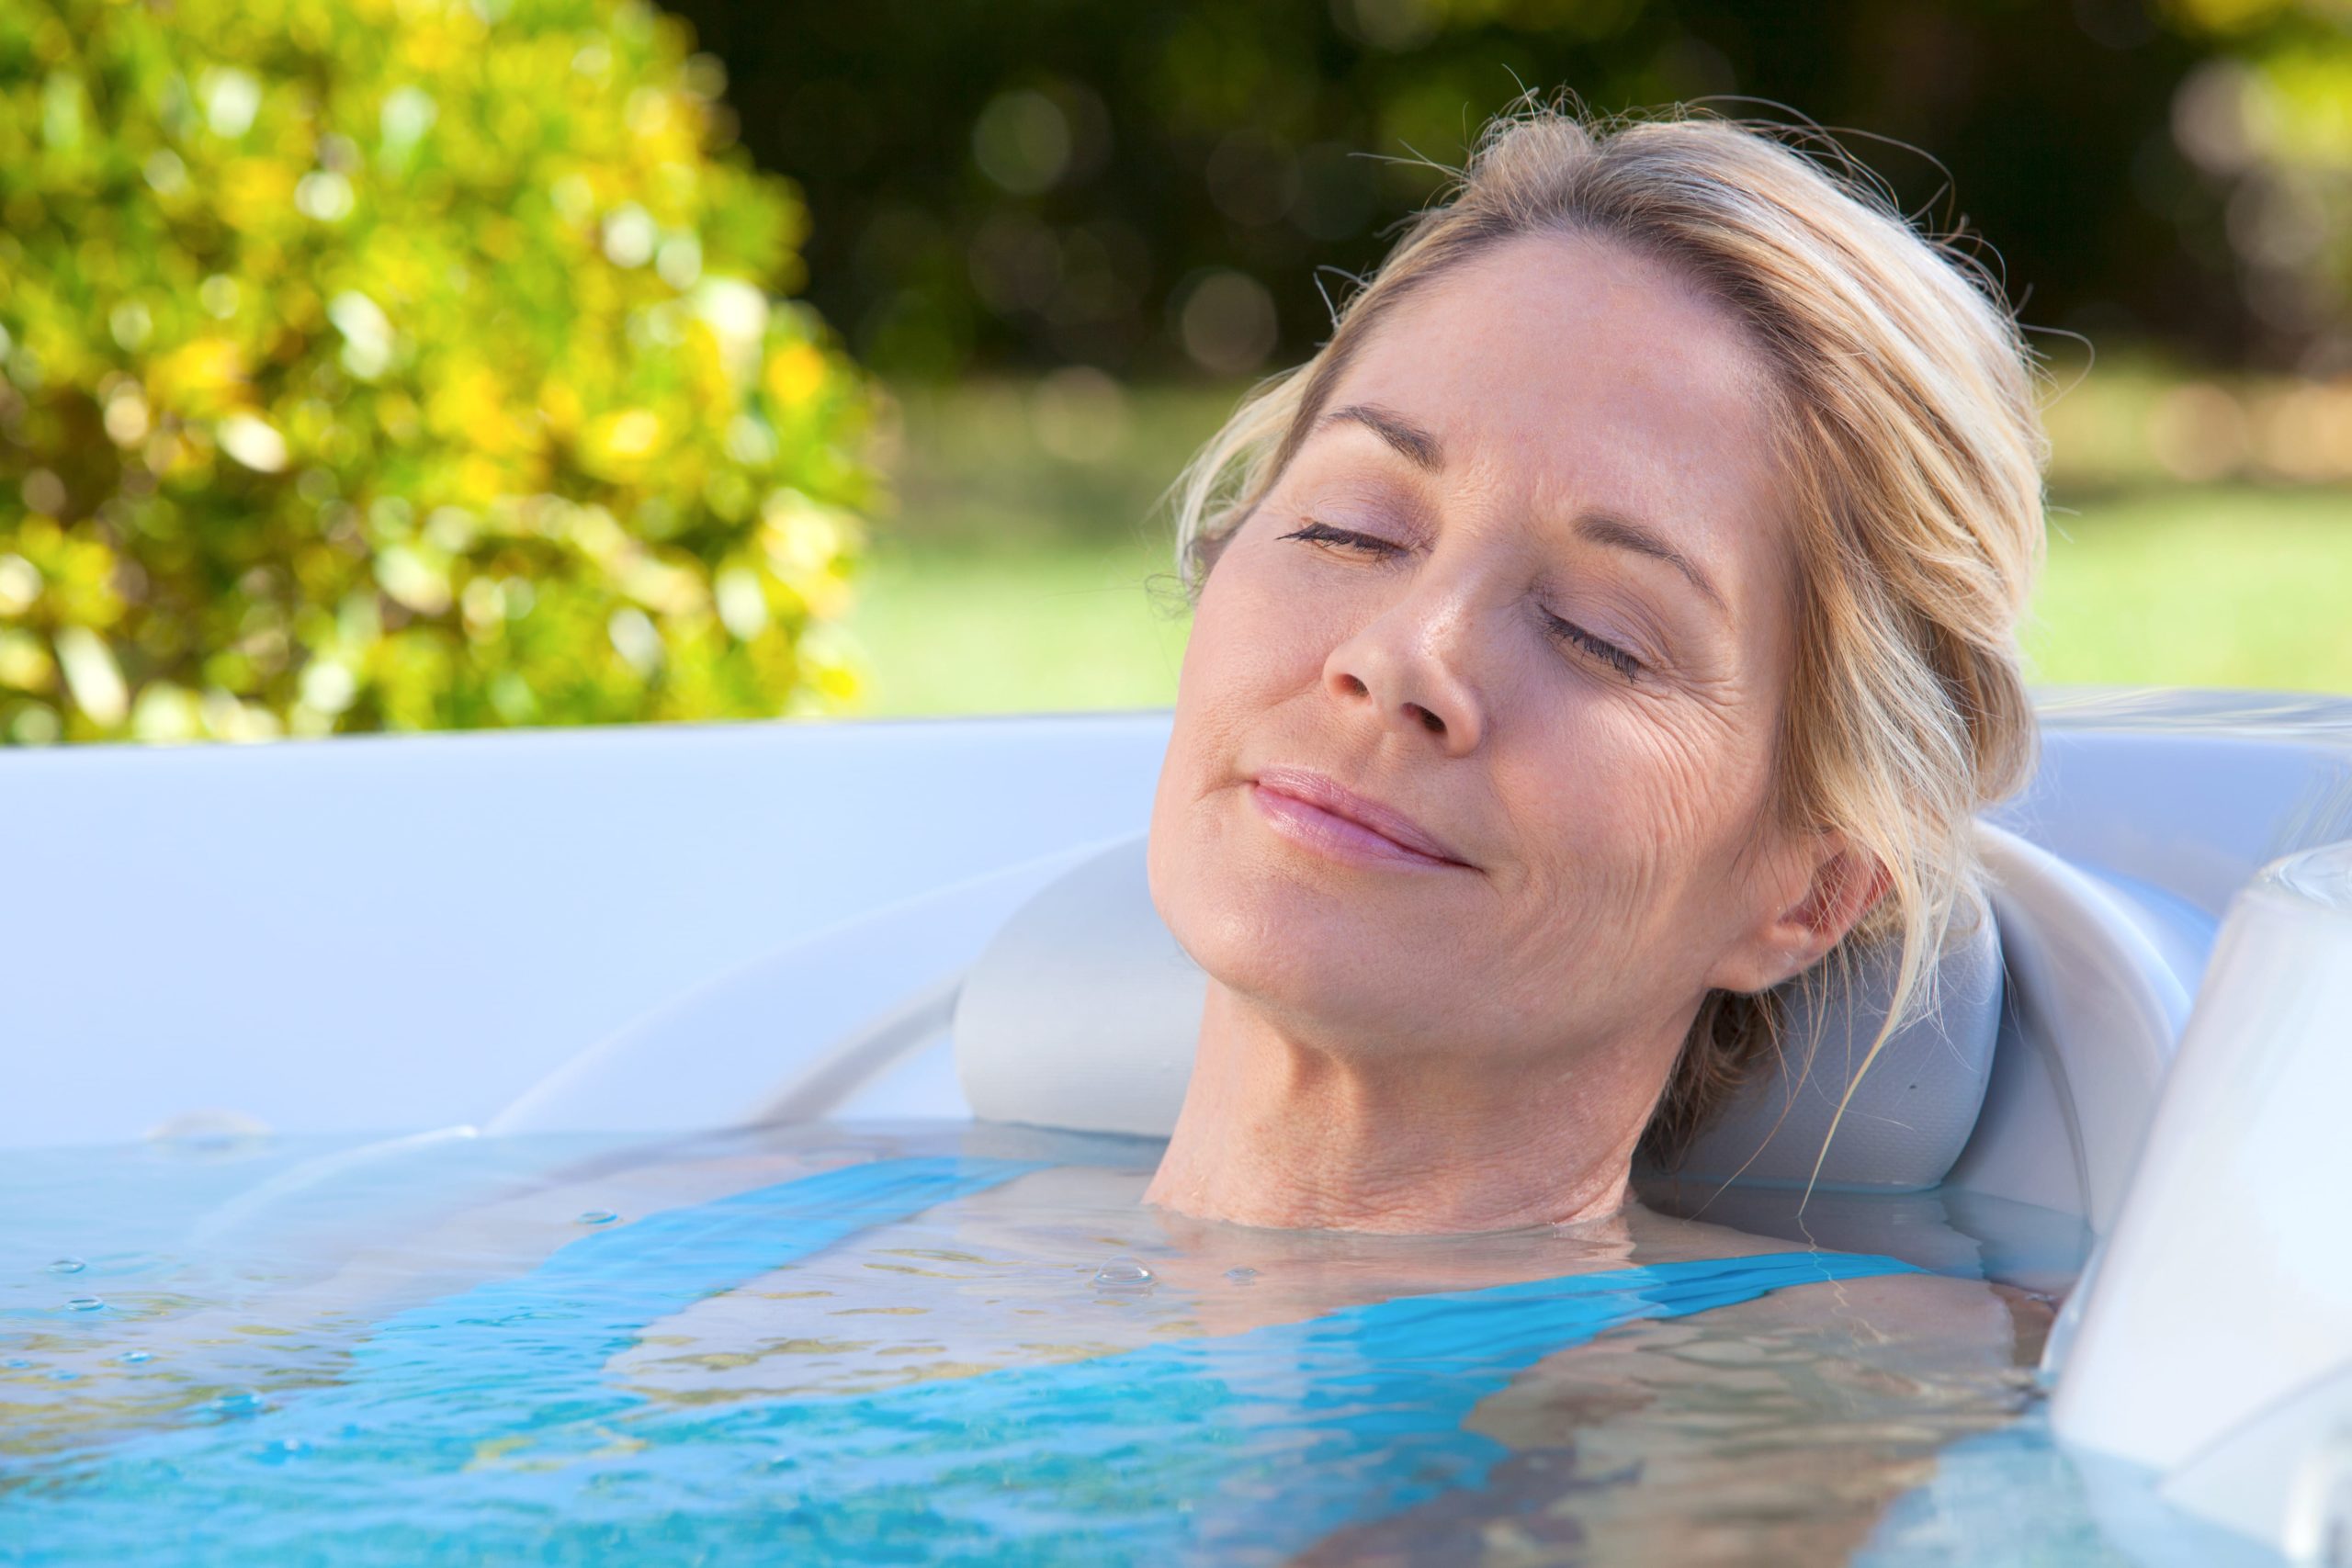 Soaking in a hot tub can help ease fibromyalgia symptoms.